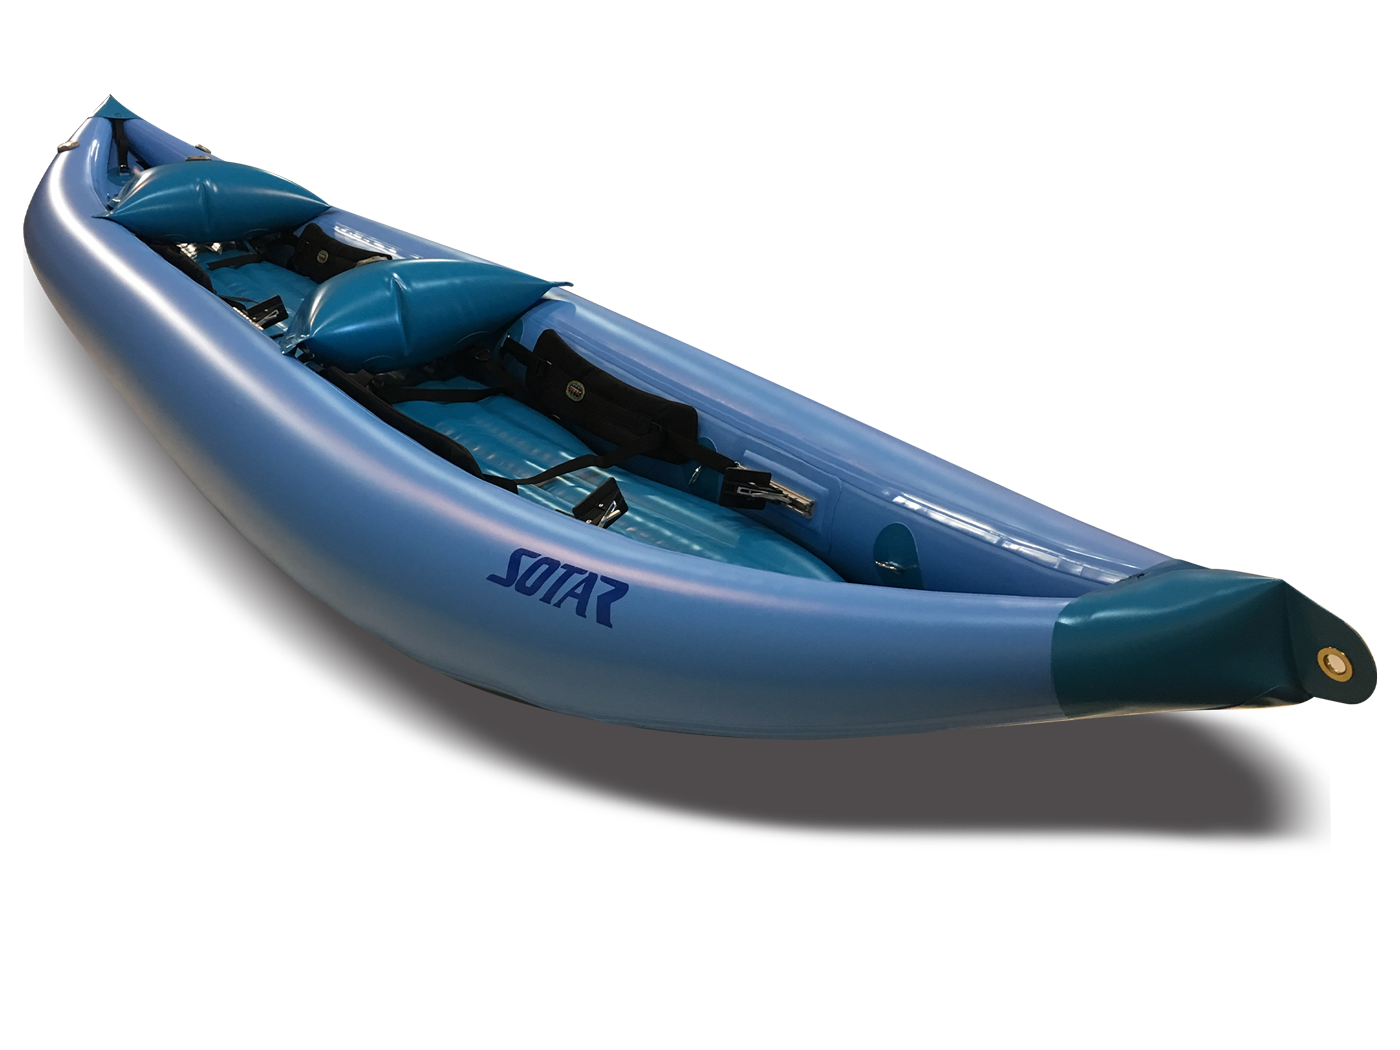 SOTAR 14' Tandem SL Inflatable Kayak